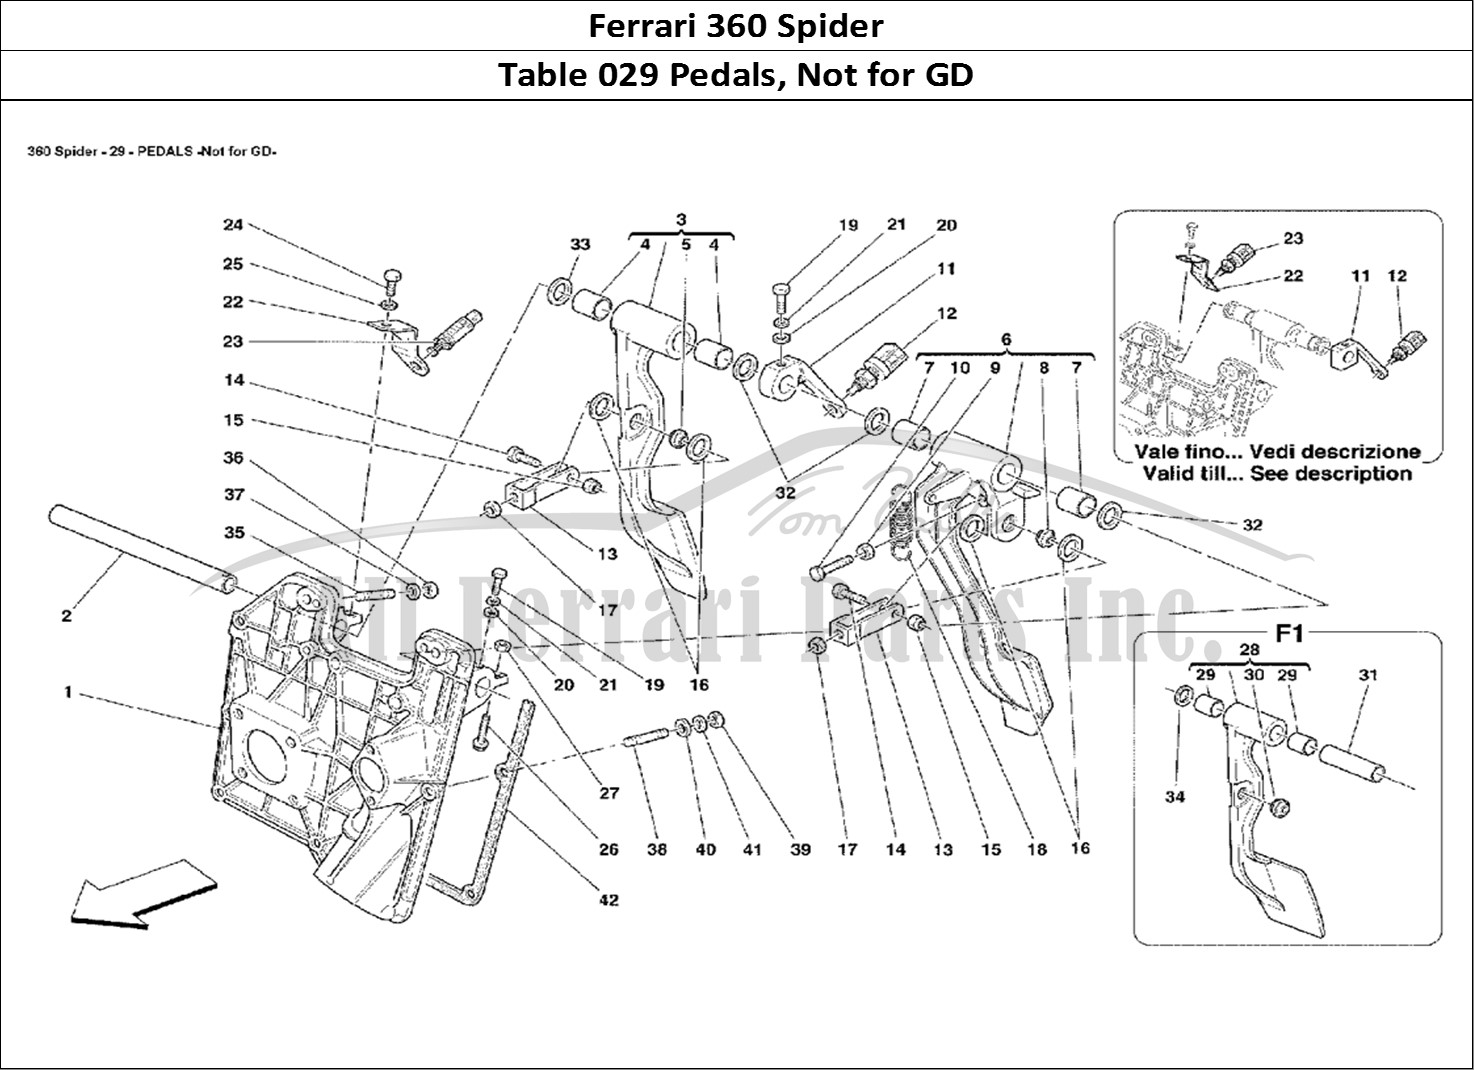 Ferrari Parts Ferrari 360 Spider Page 029 Pedals - Not for GD